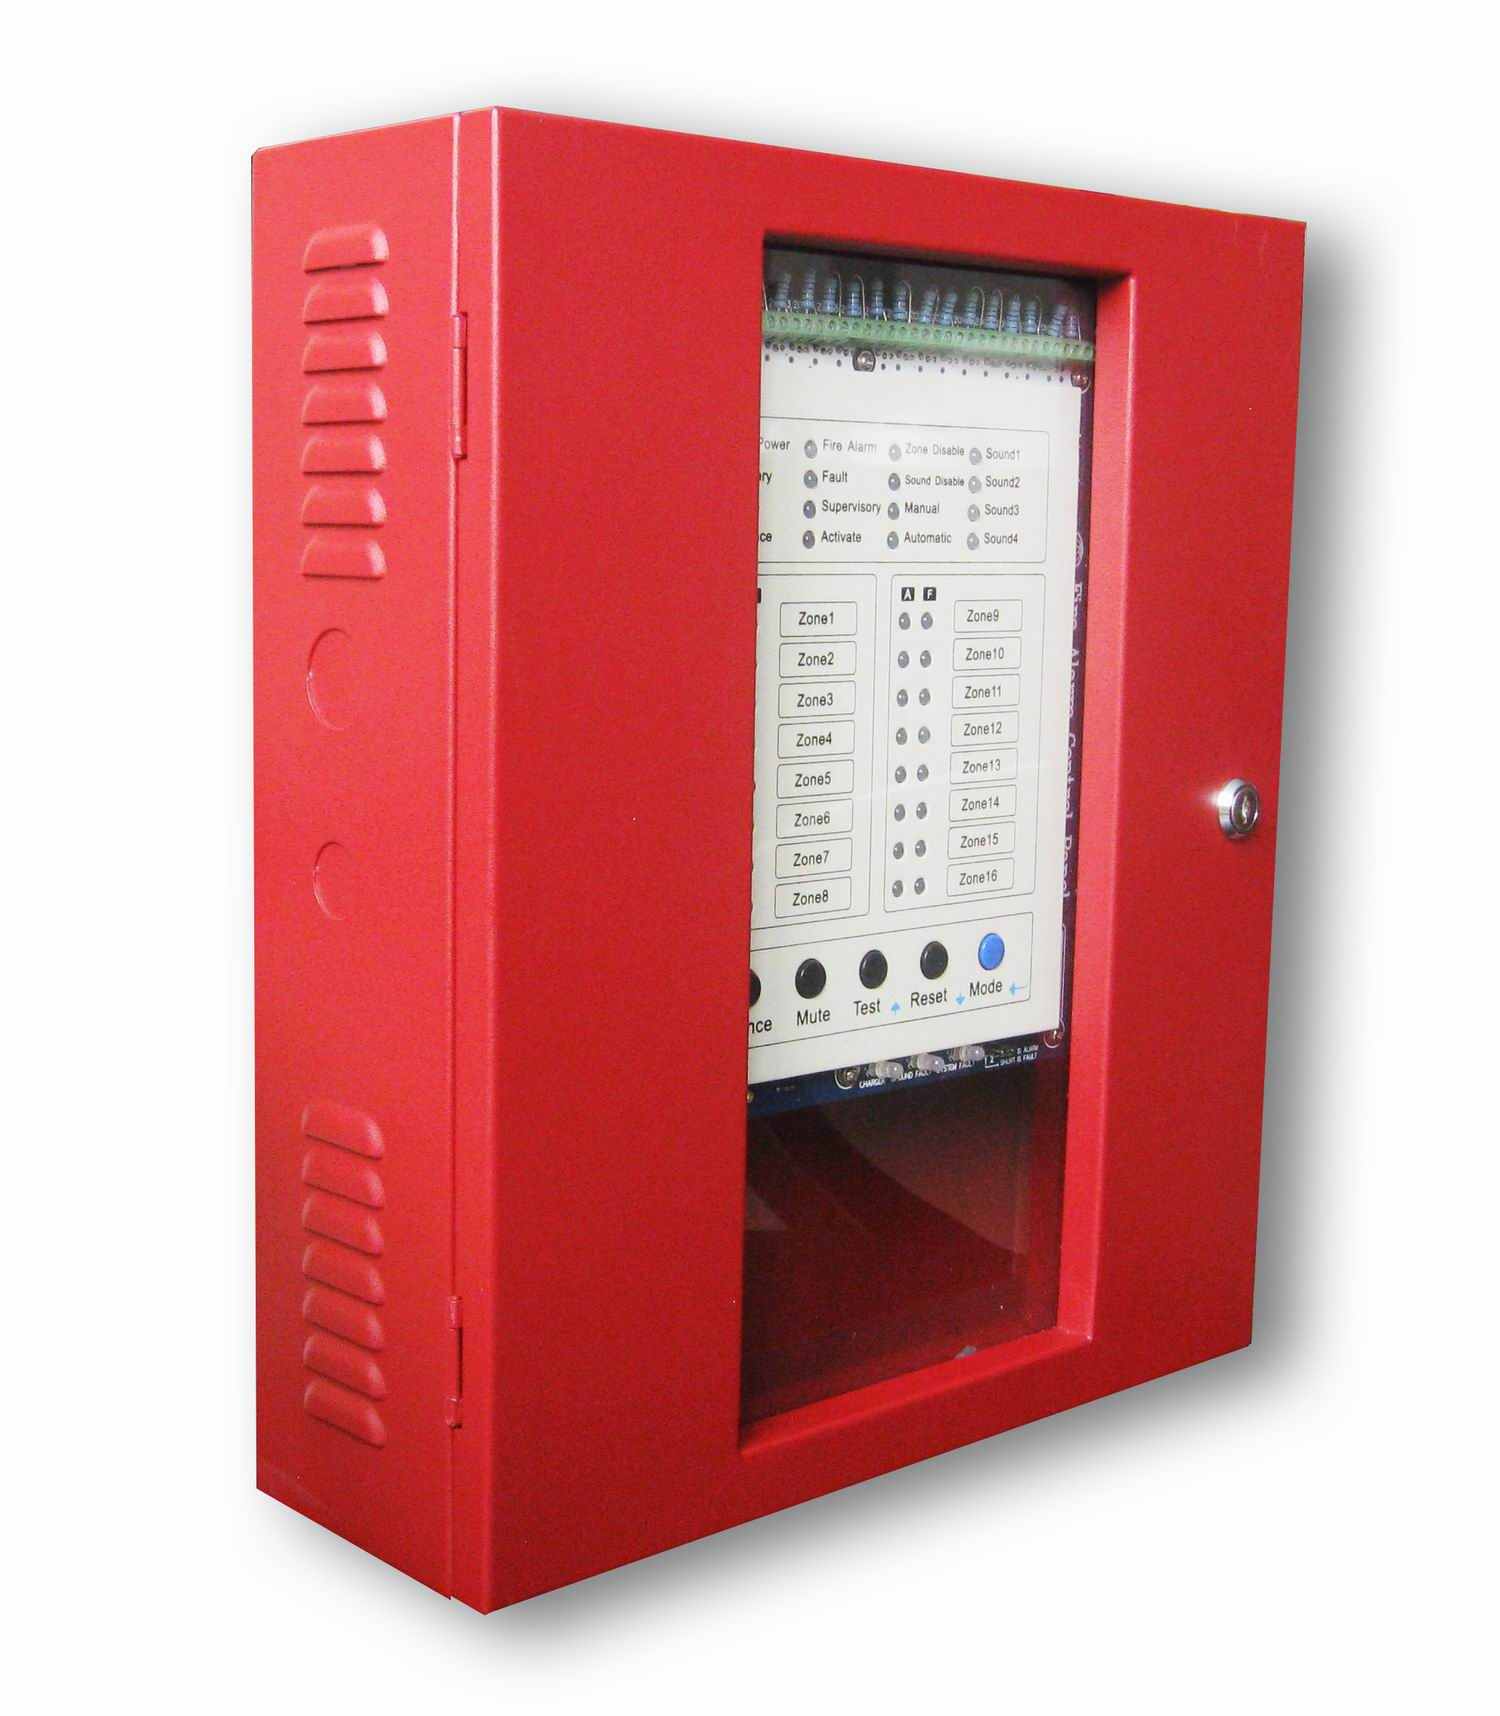 Fire-Alarm-System-HM-1004-